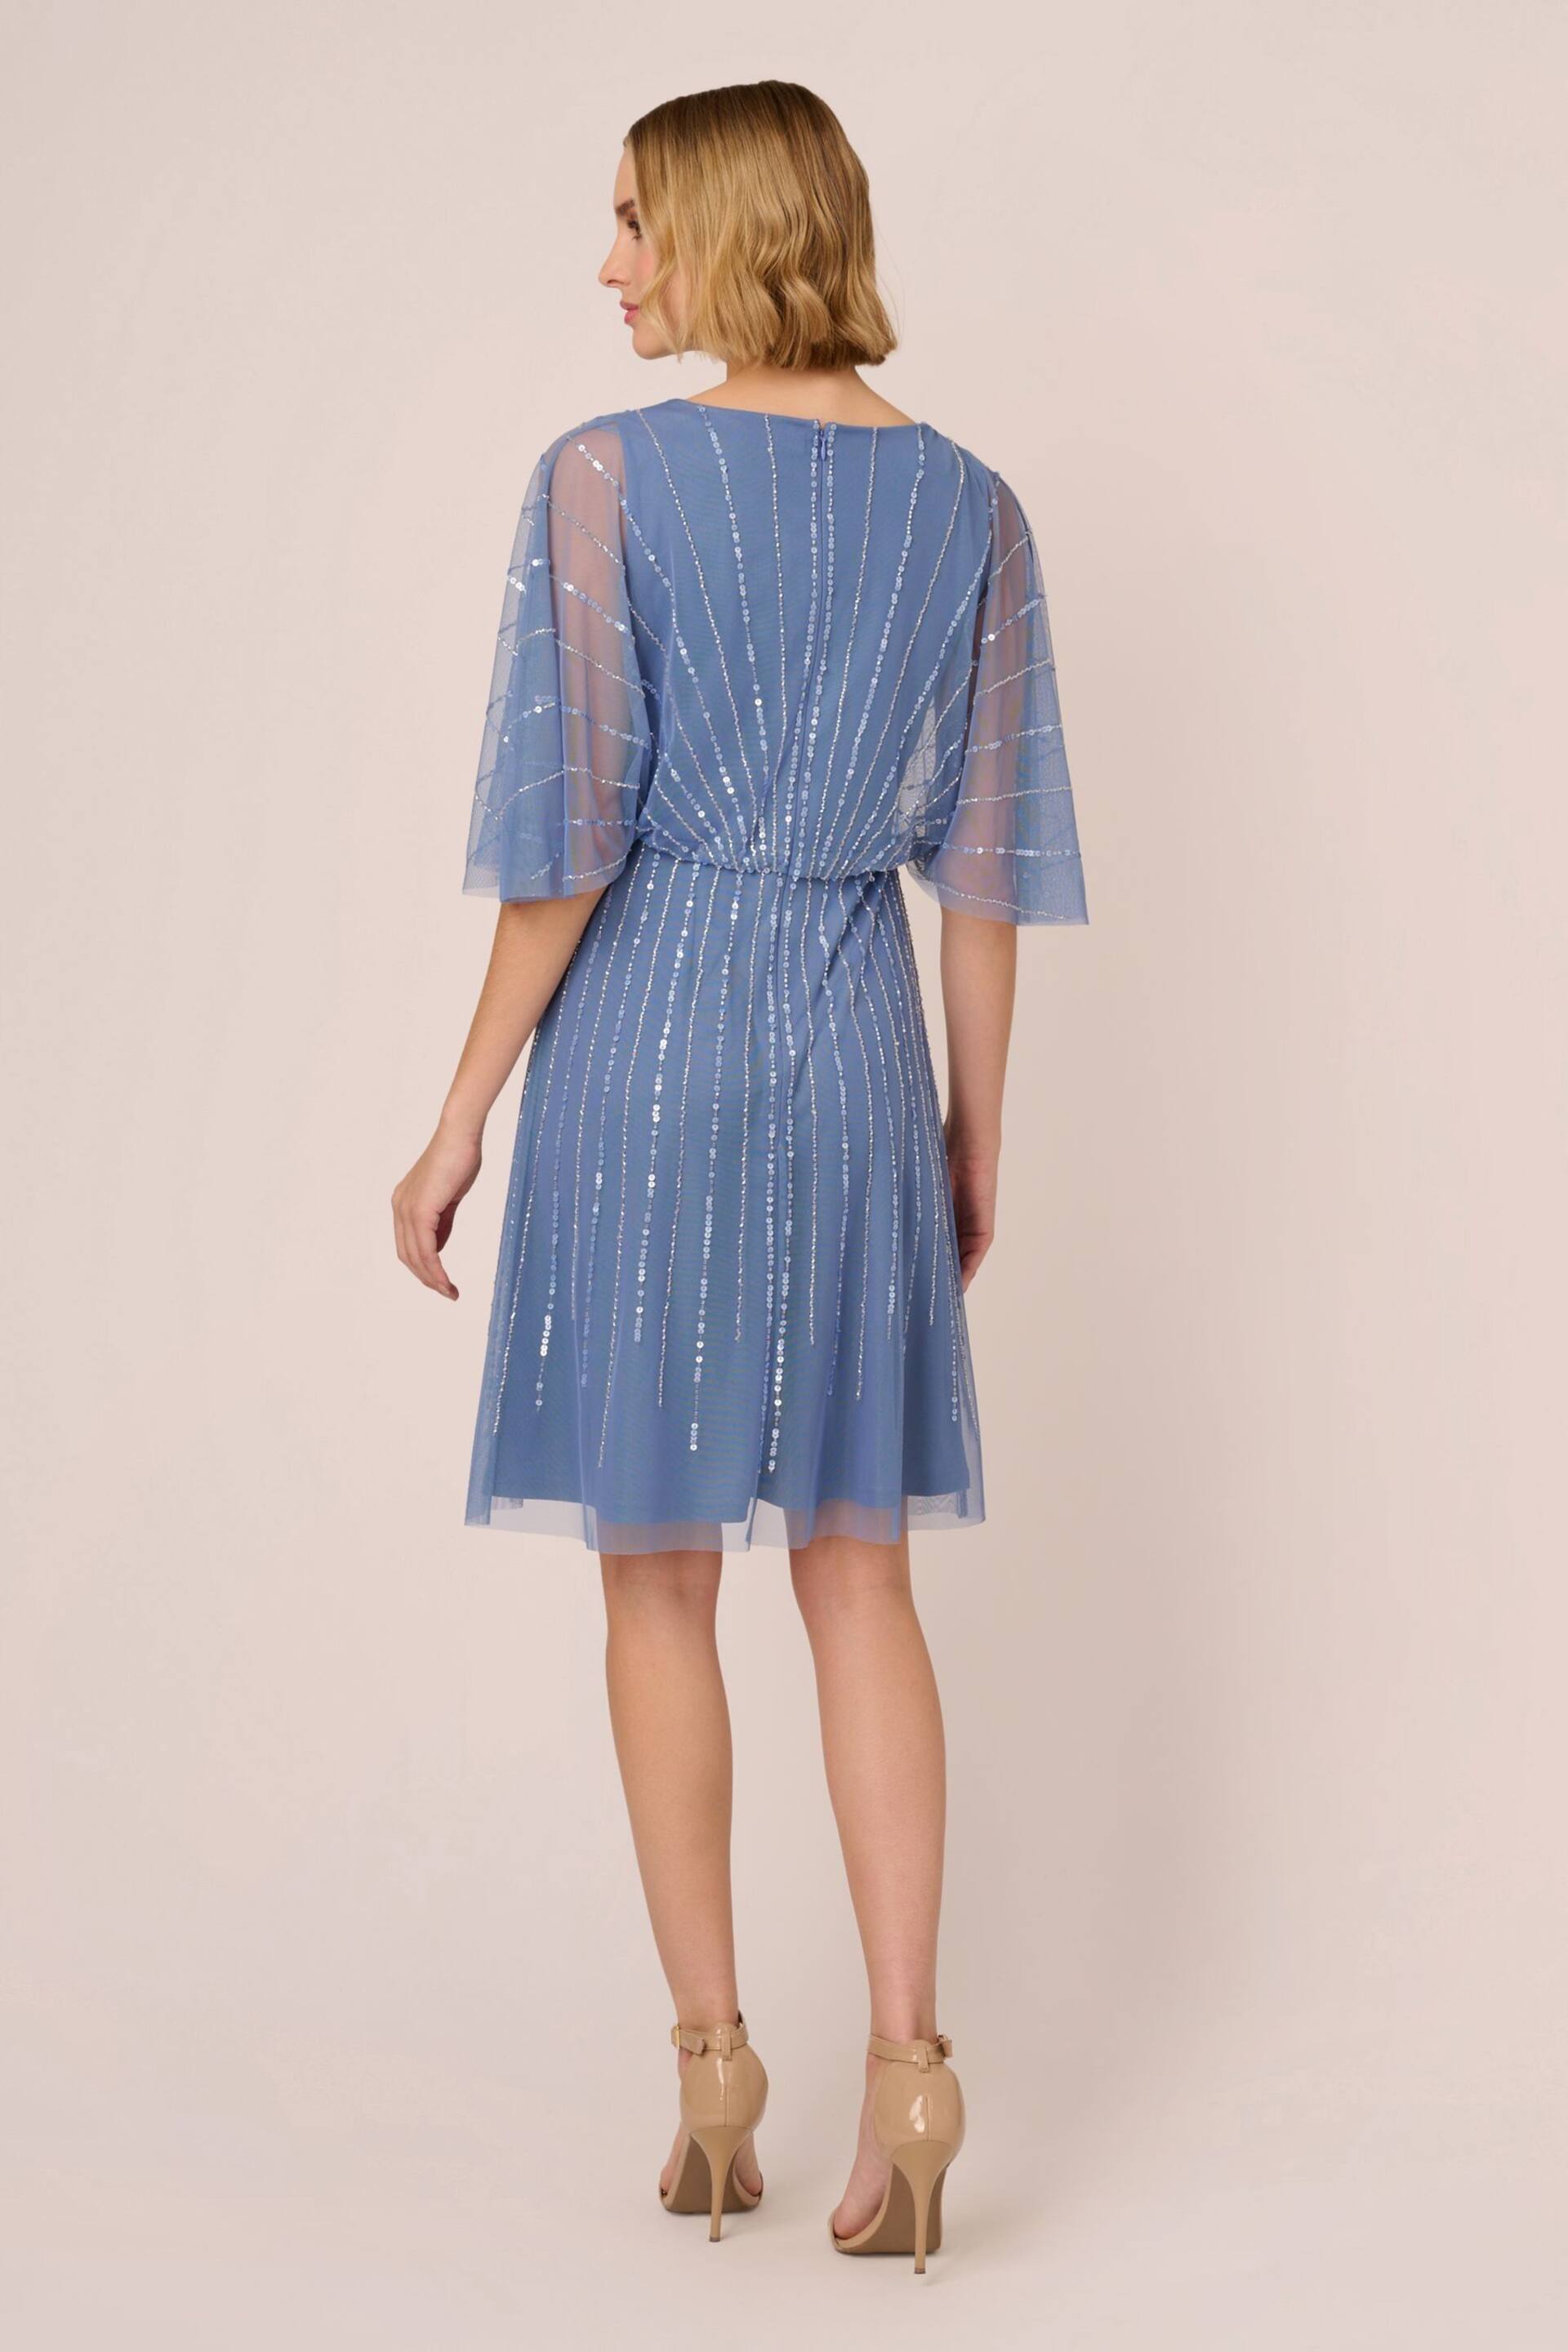 Adrianna Papell Blue Beaded Short Dress - Image 2 of 7